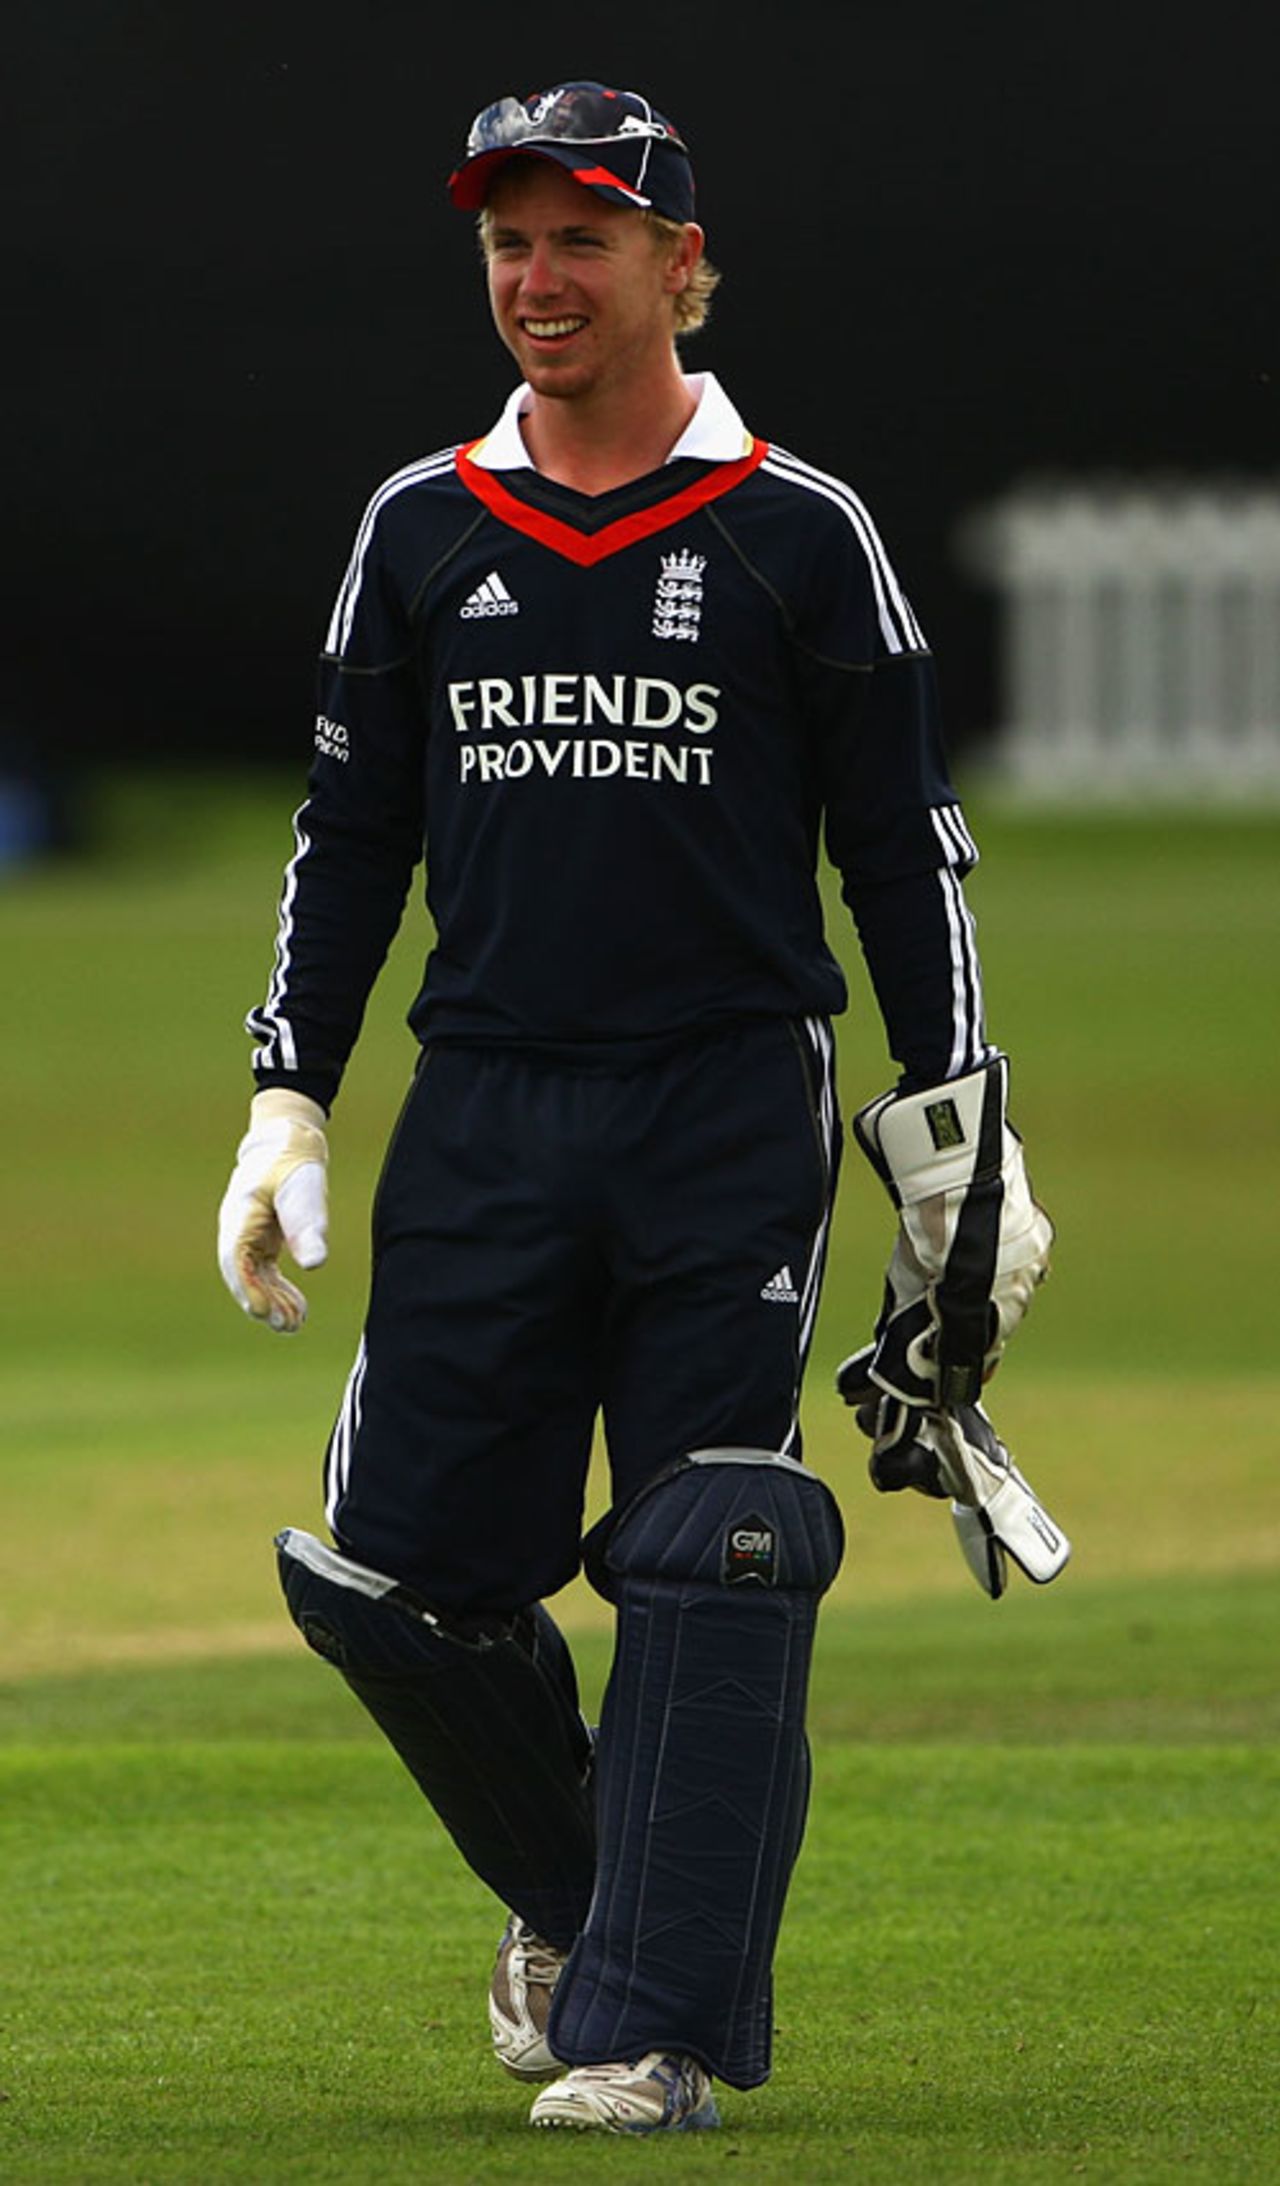 Keeper Adam Wheater sees the funny side, England U-19 v Bangladesh U-19, 1st ODI, Grace Road, July 18, 2009